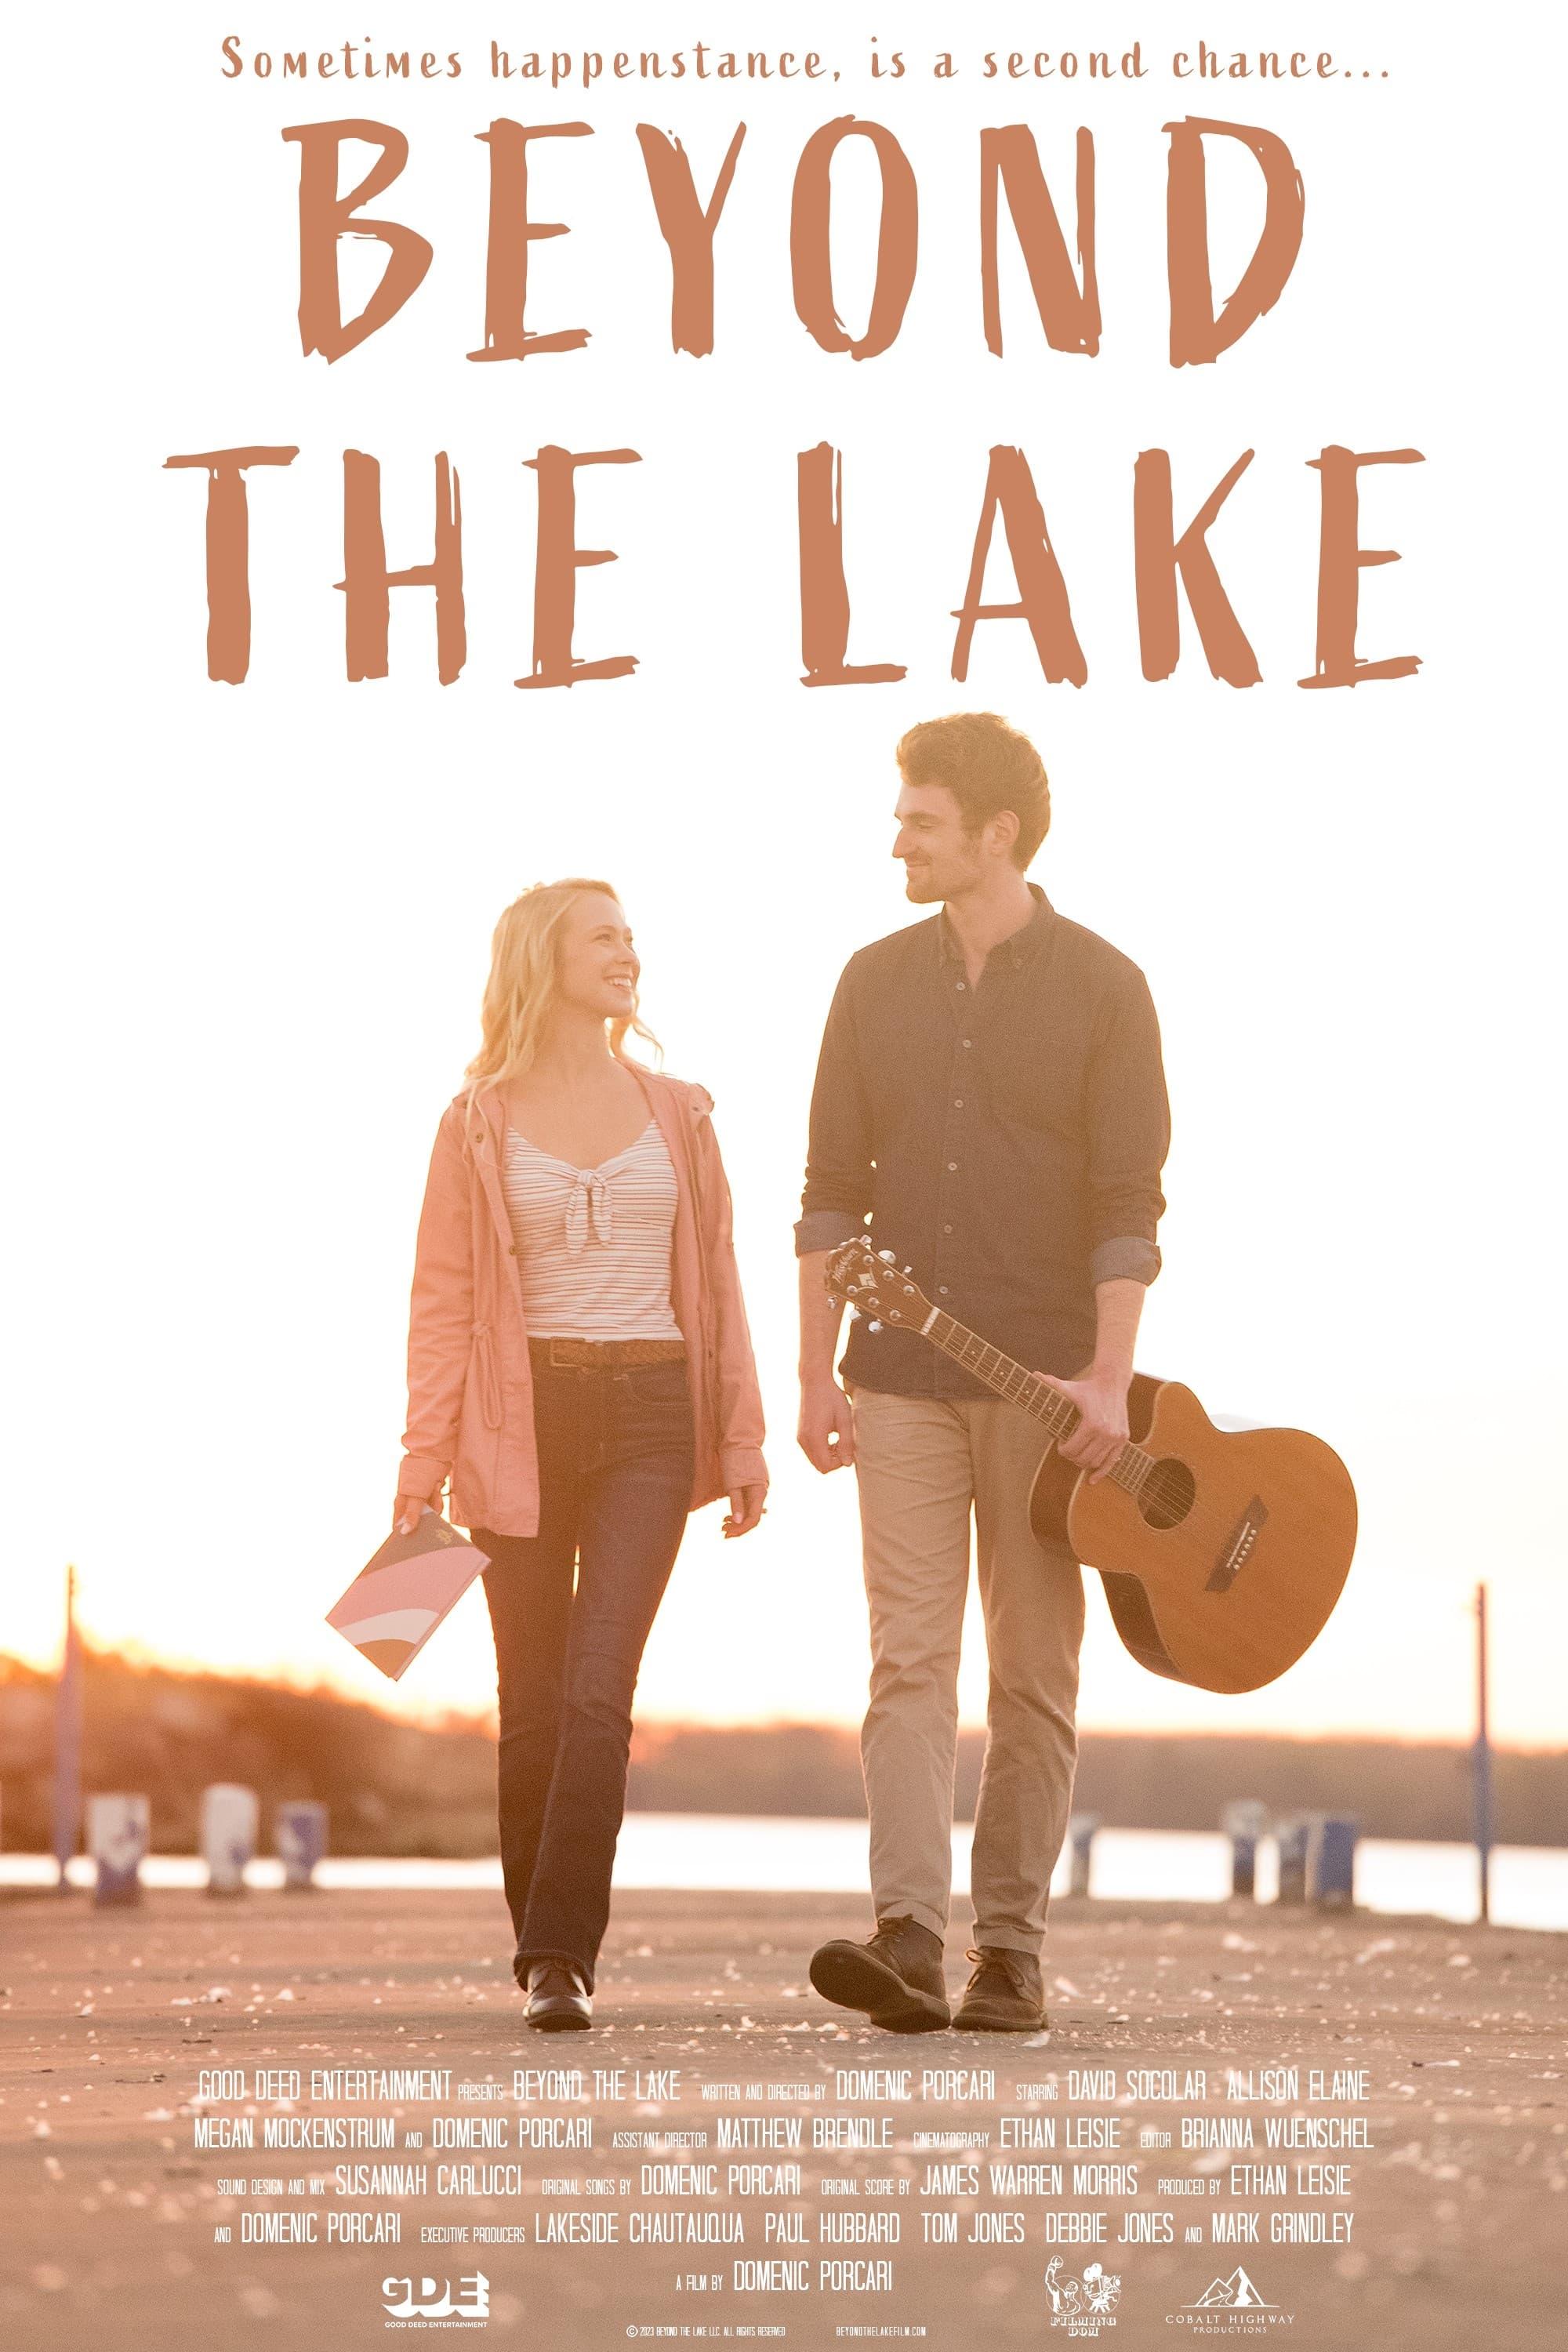 Beyond the Lake poster